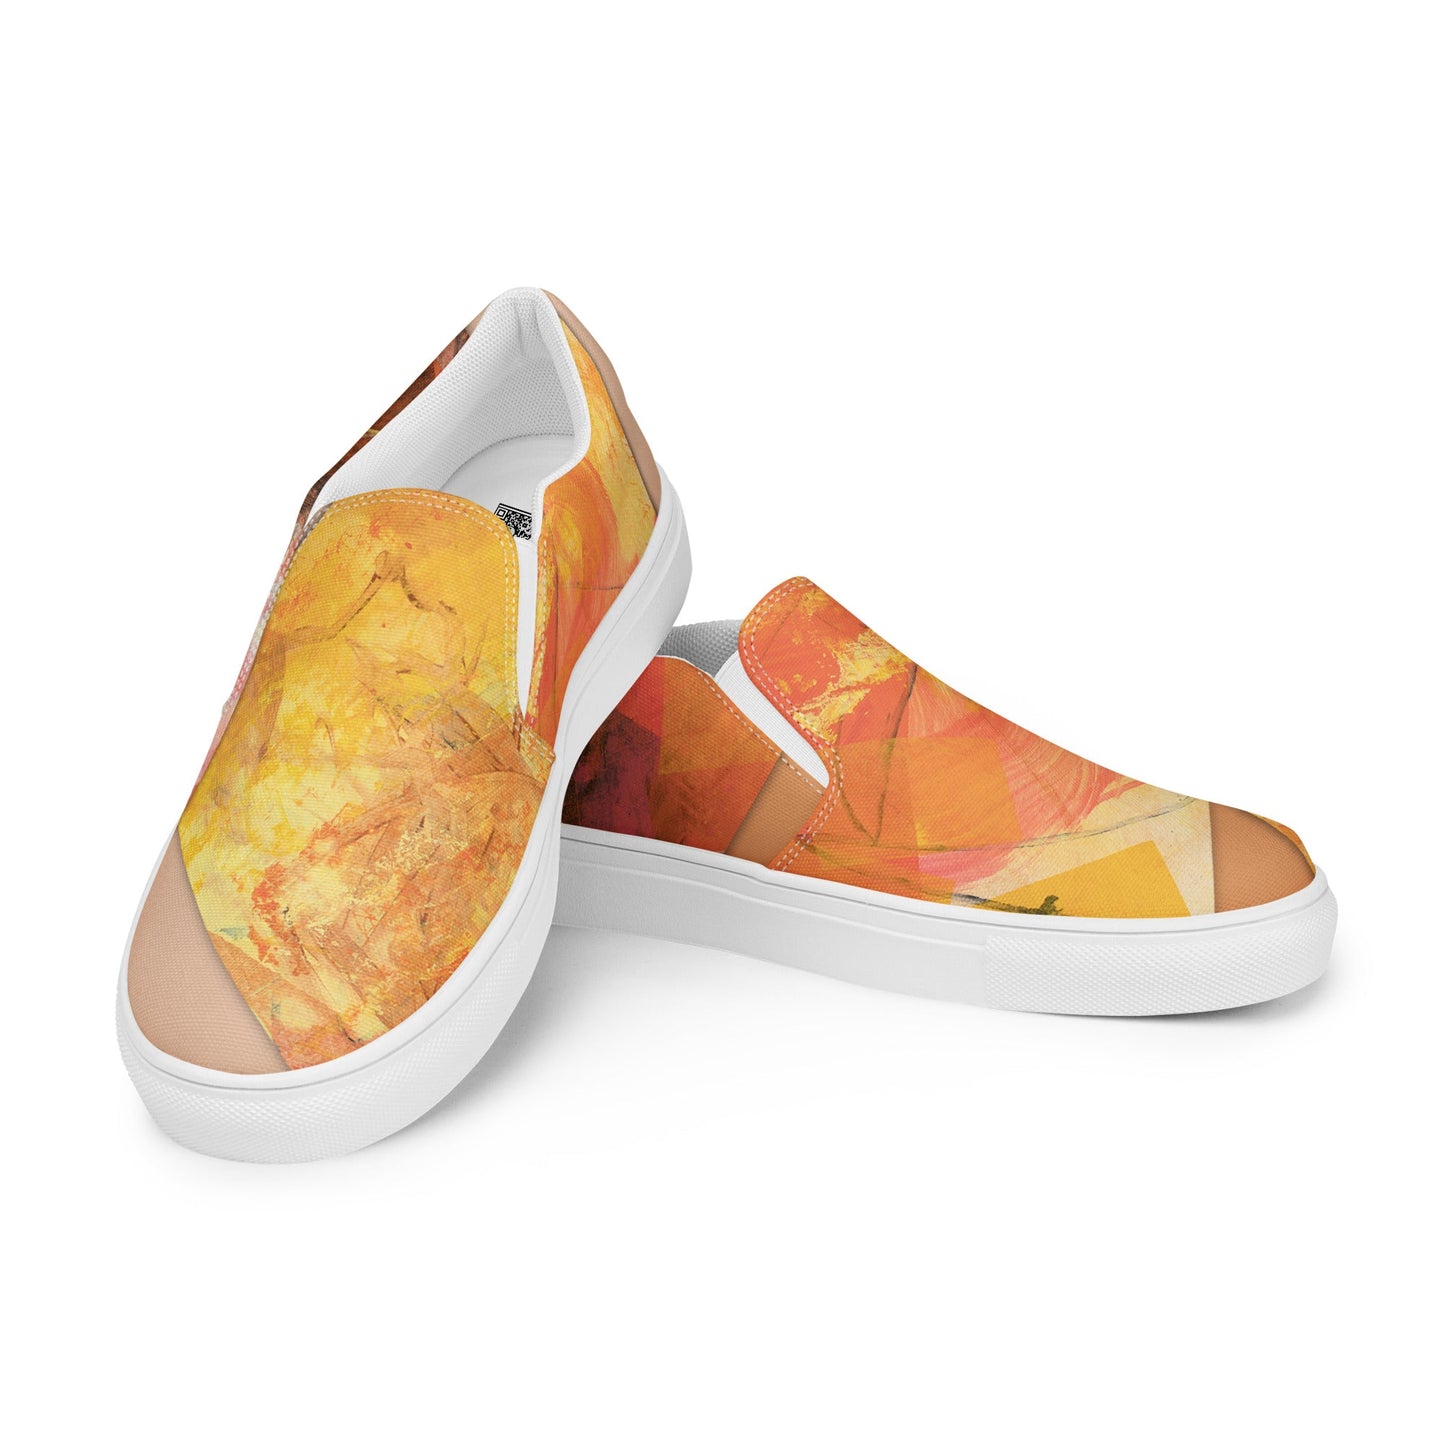 klasneakers Women’s slip-on canvas shoes - Far Bank 2